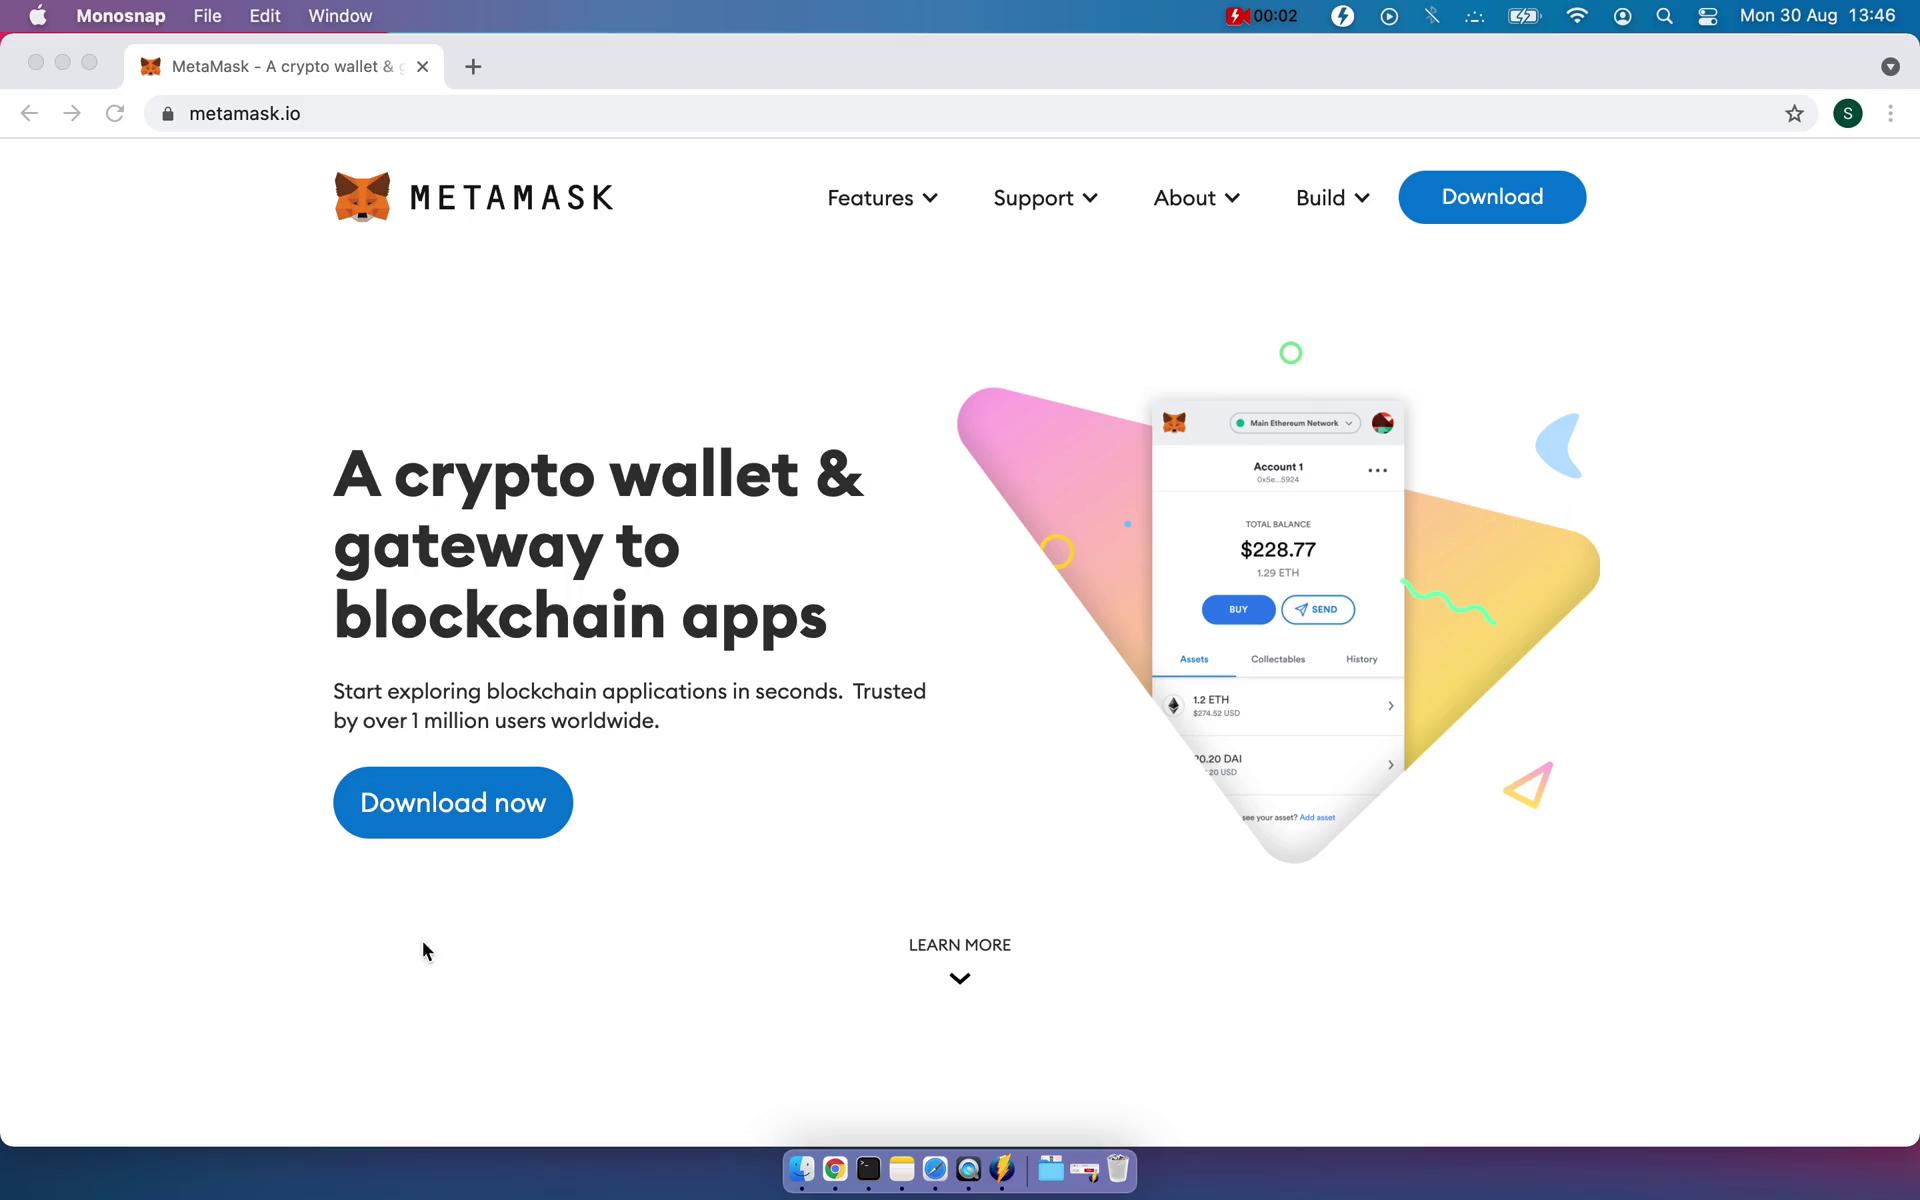 MetaMask homepage screenshot